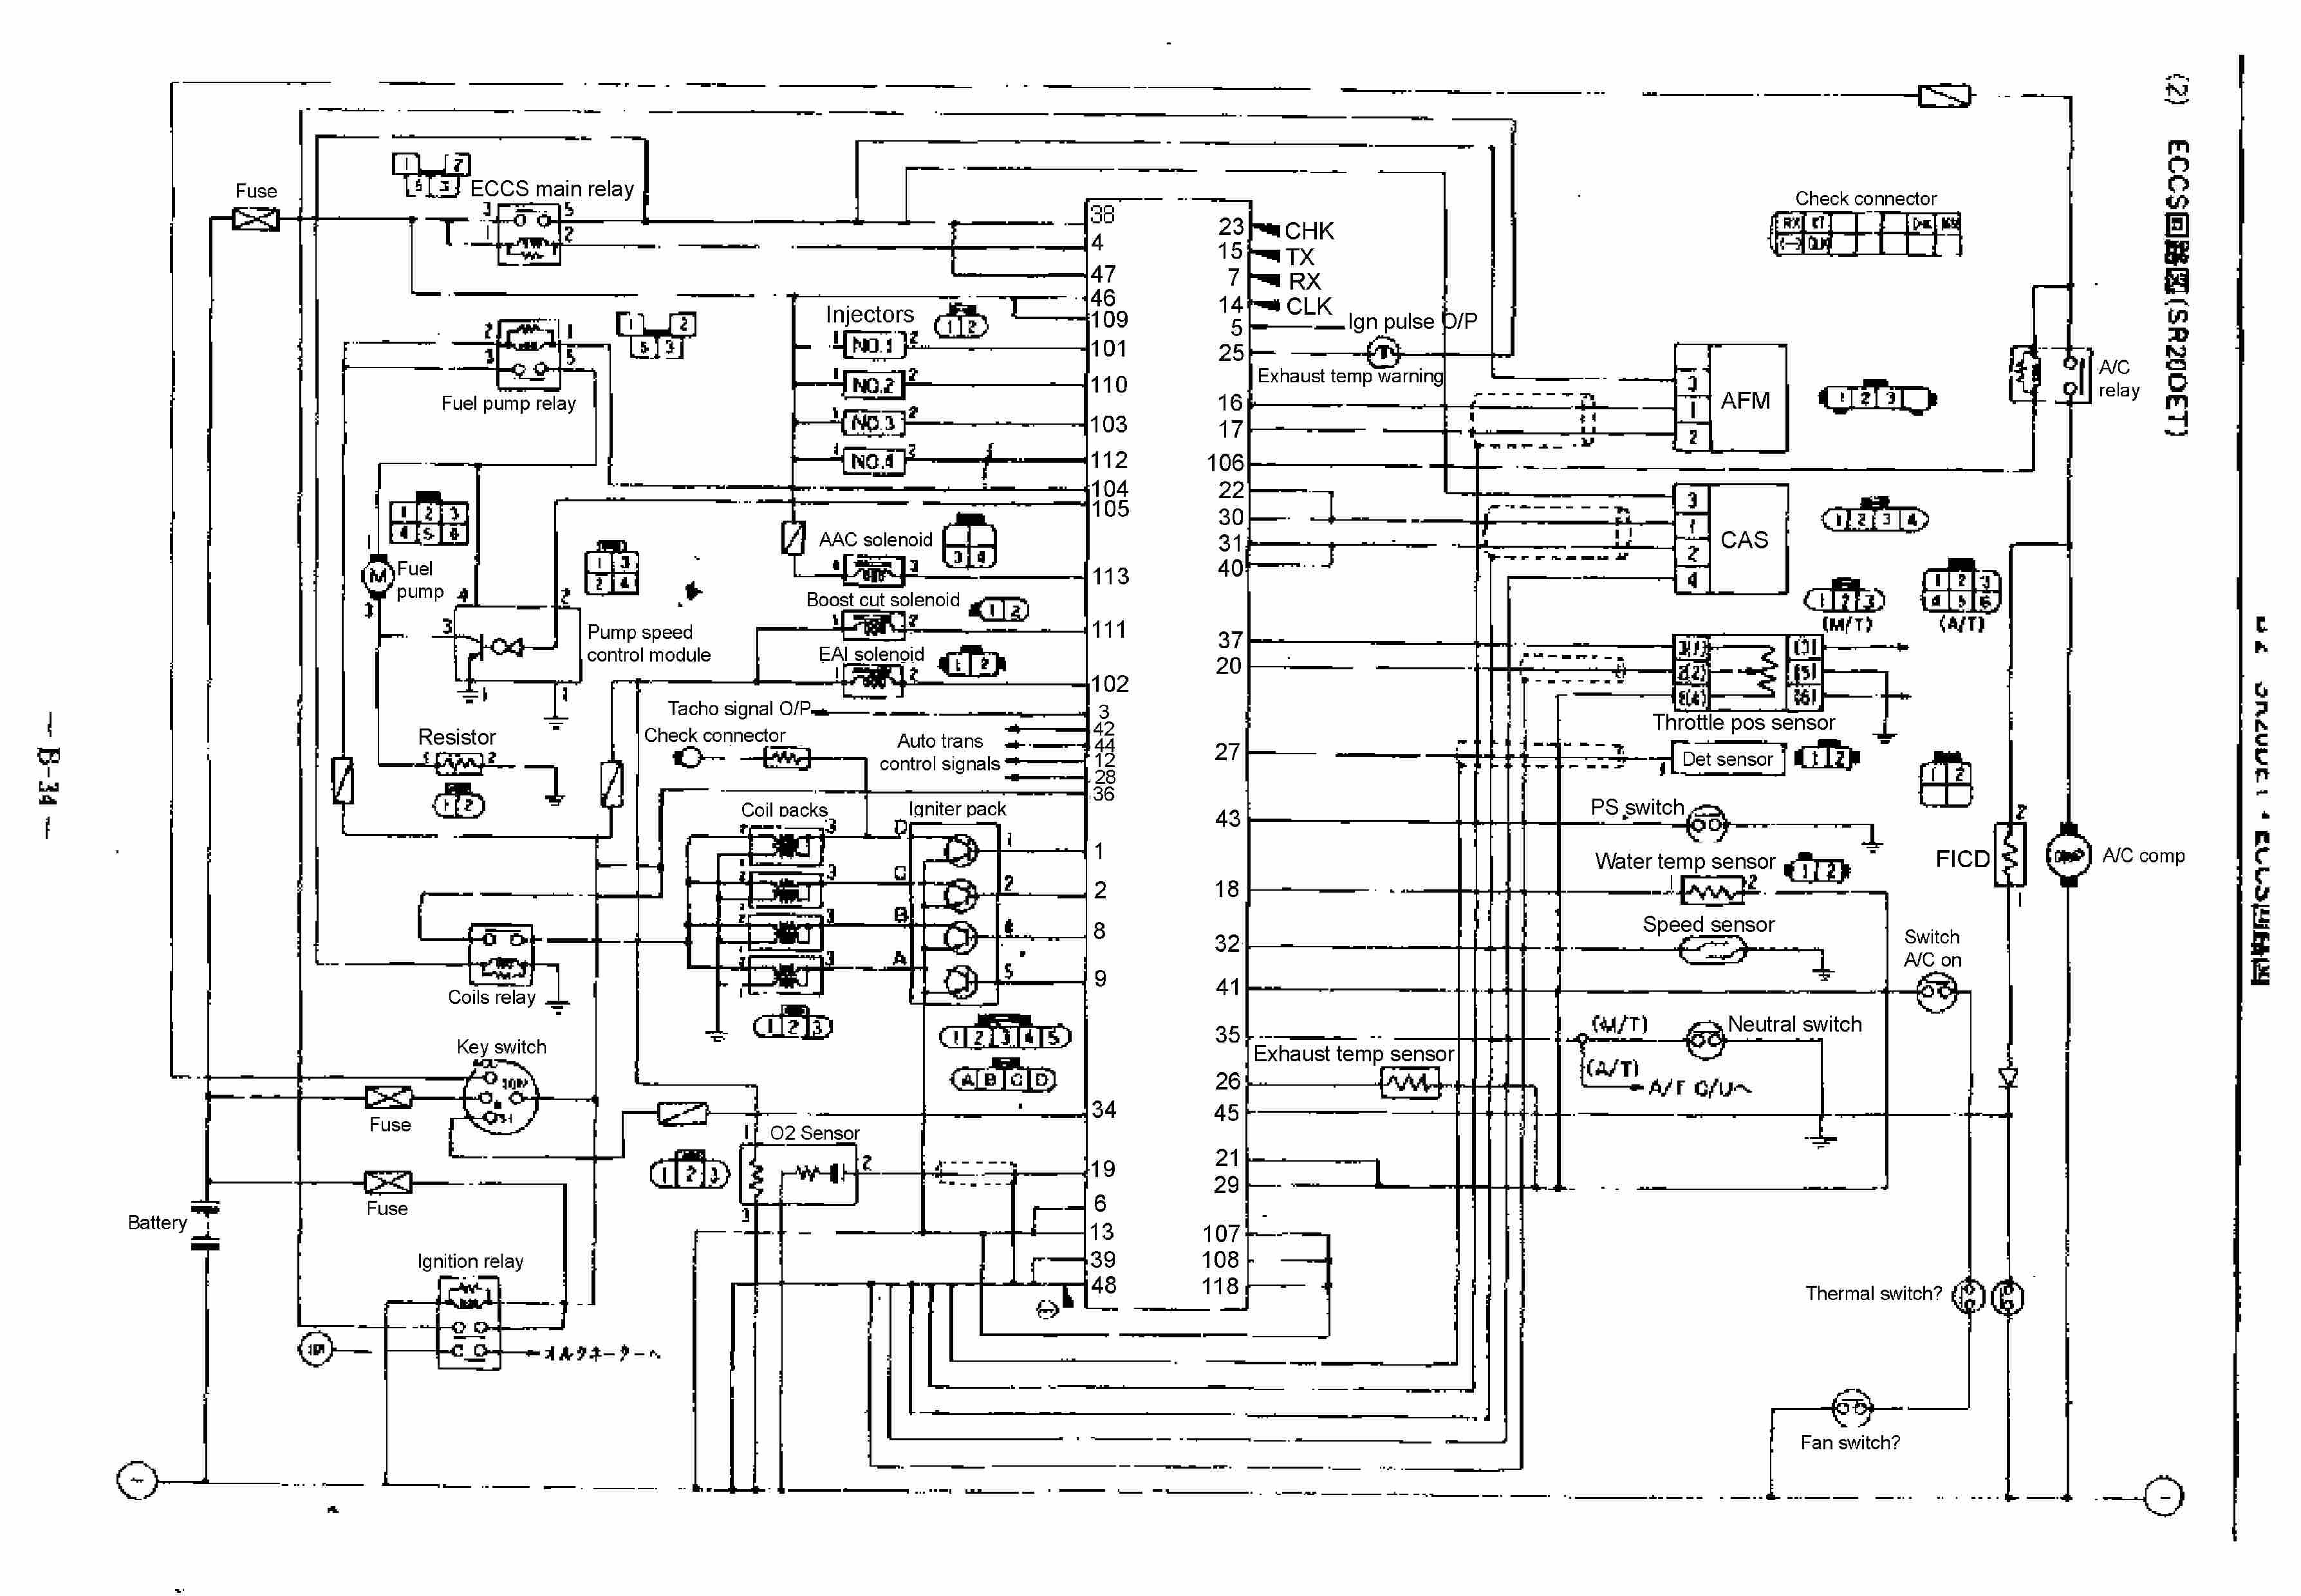 Nissan Car Pdf Manual Wiring Diagram, 2005 Nissan Titan Ignition Wiring Diagram Pdf